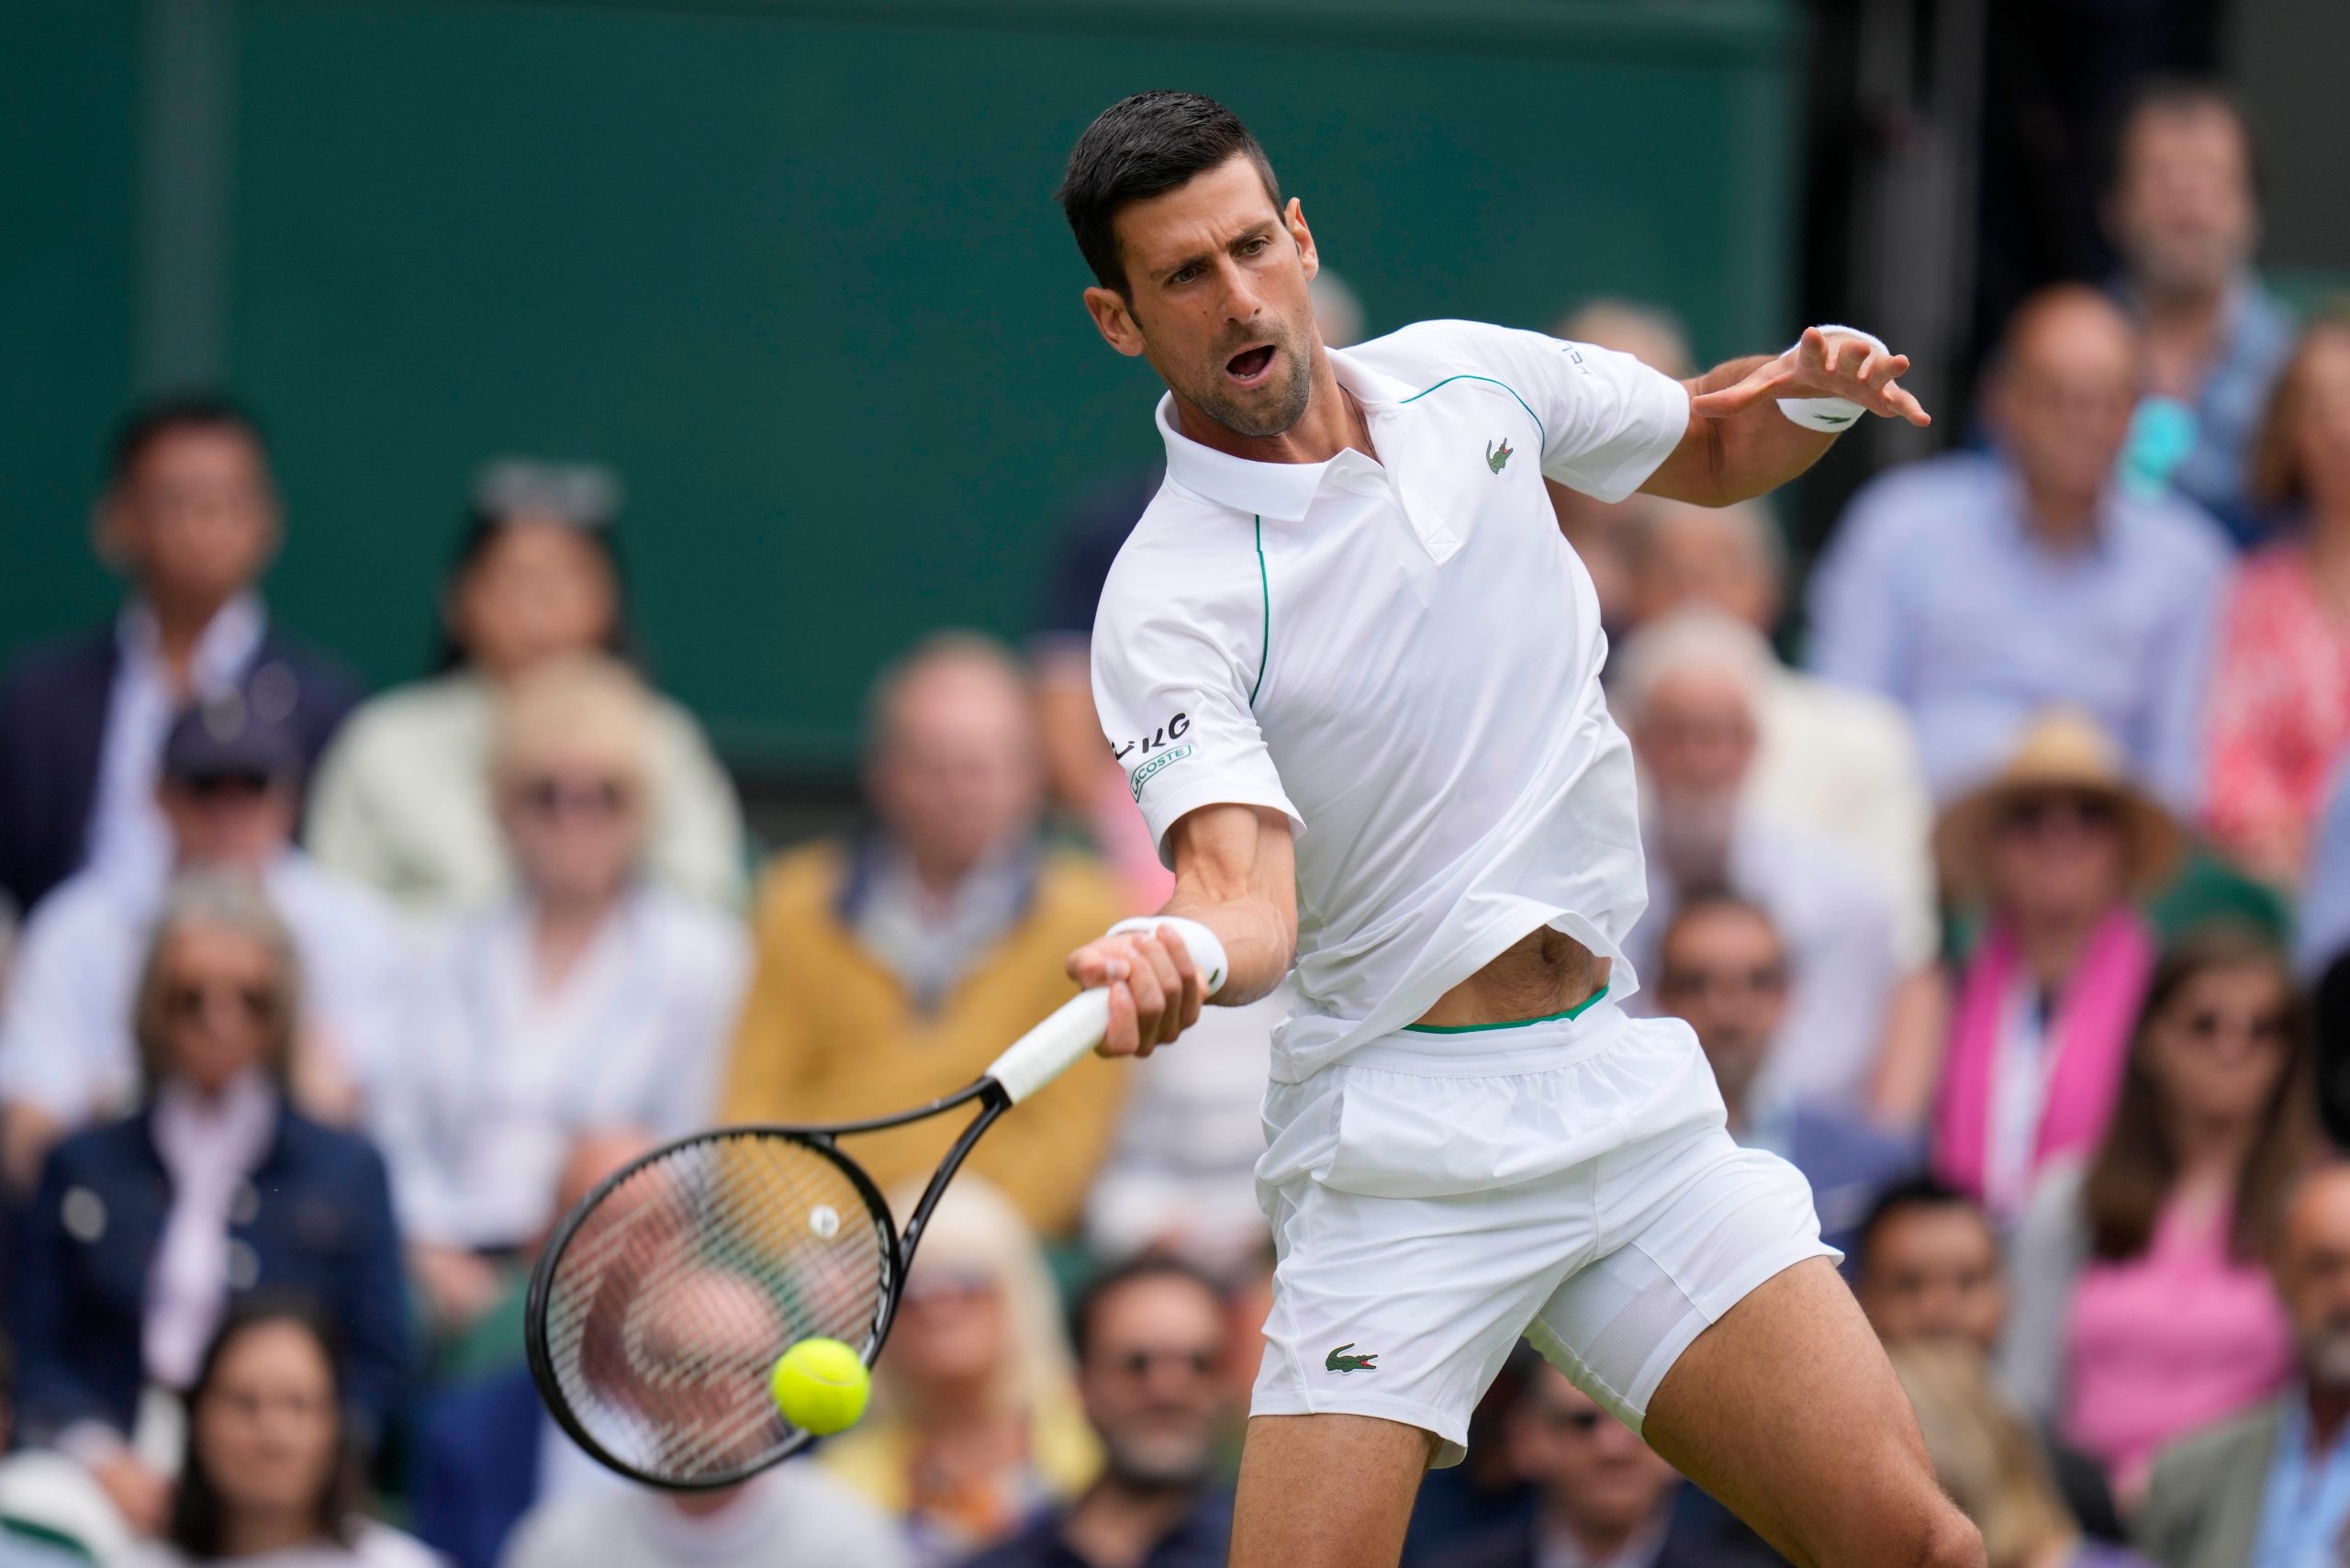 Wimbledon final between Novak Djokovic and Matteo Berrettini: All you need to know